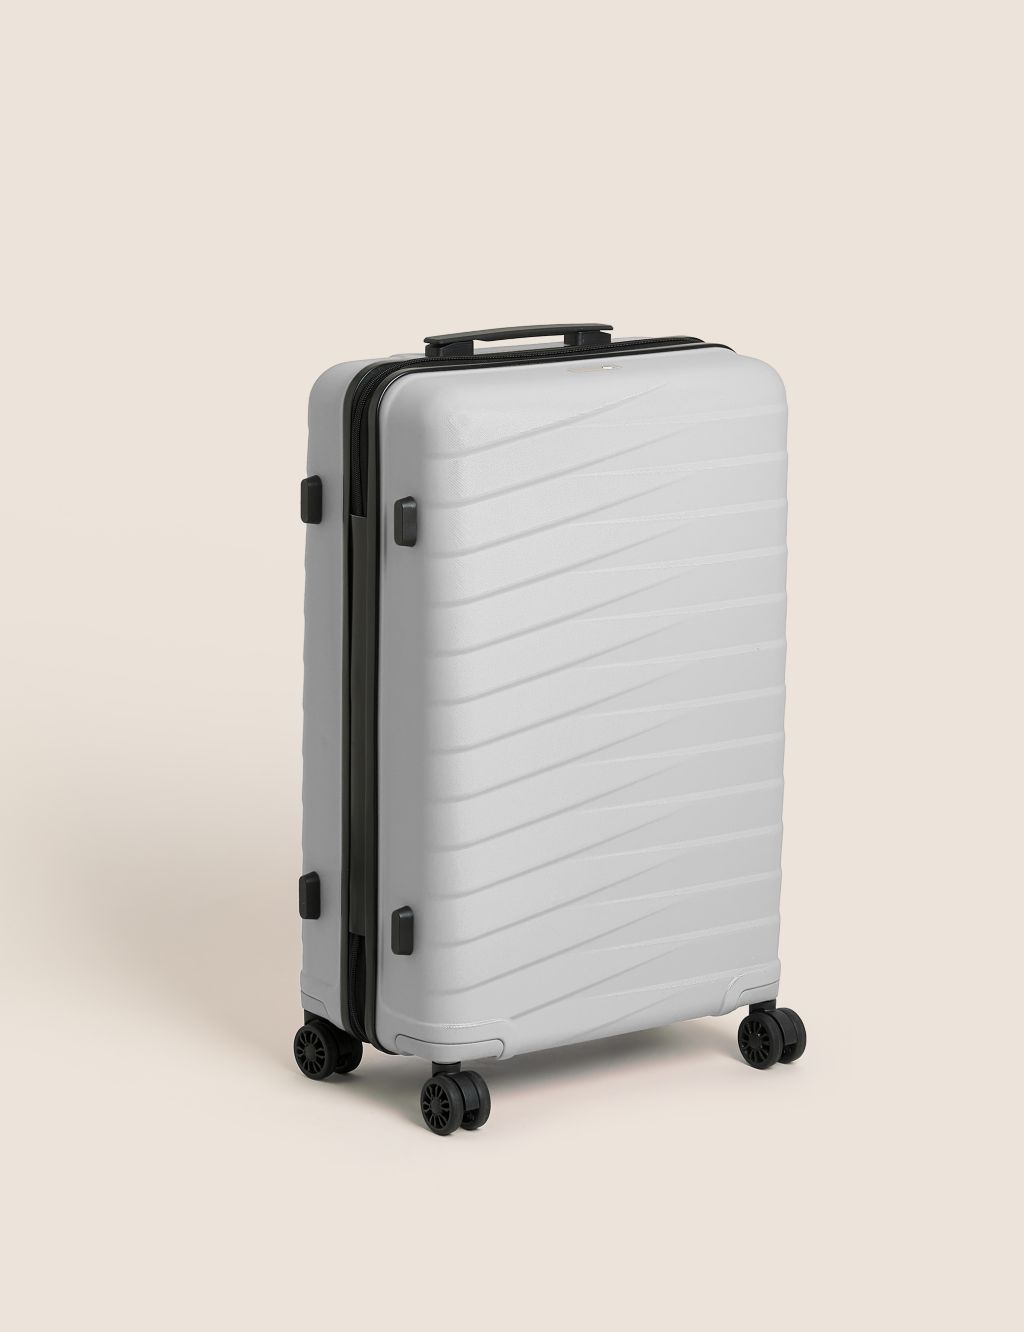 Oslo 4 Wheel Hard Shell Medium Suitcase